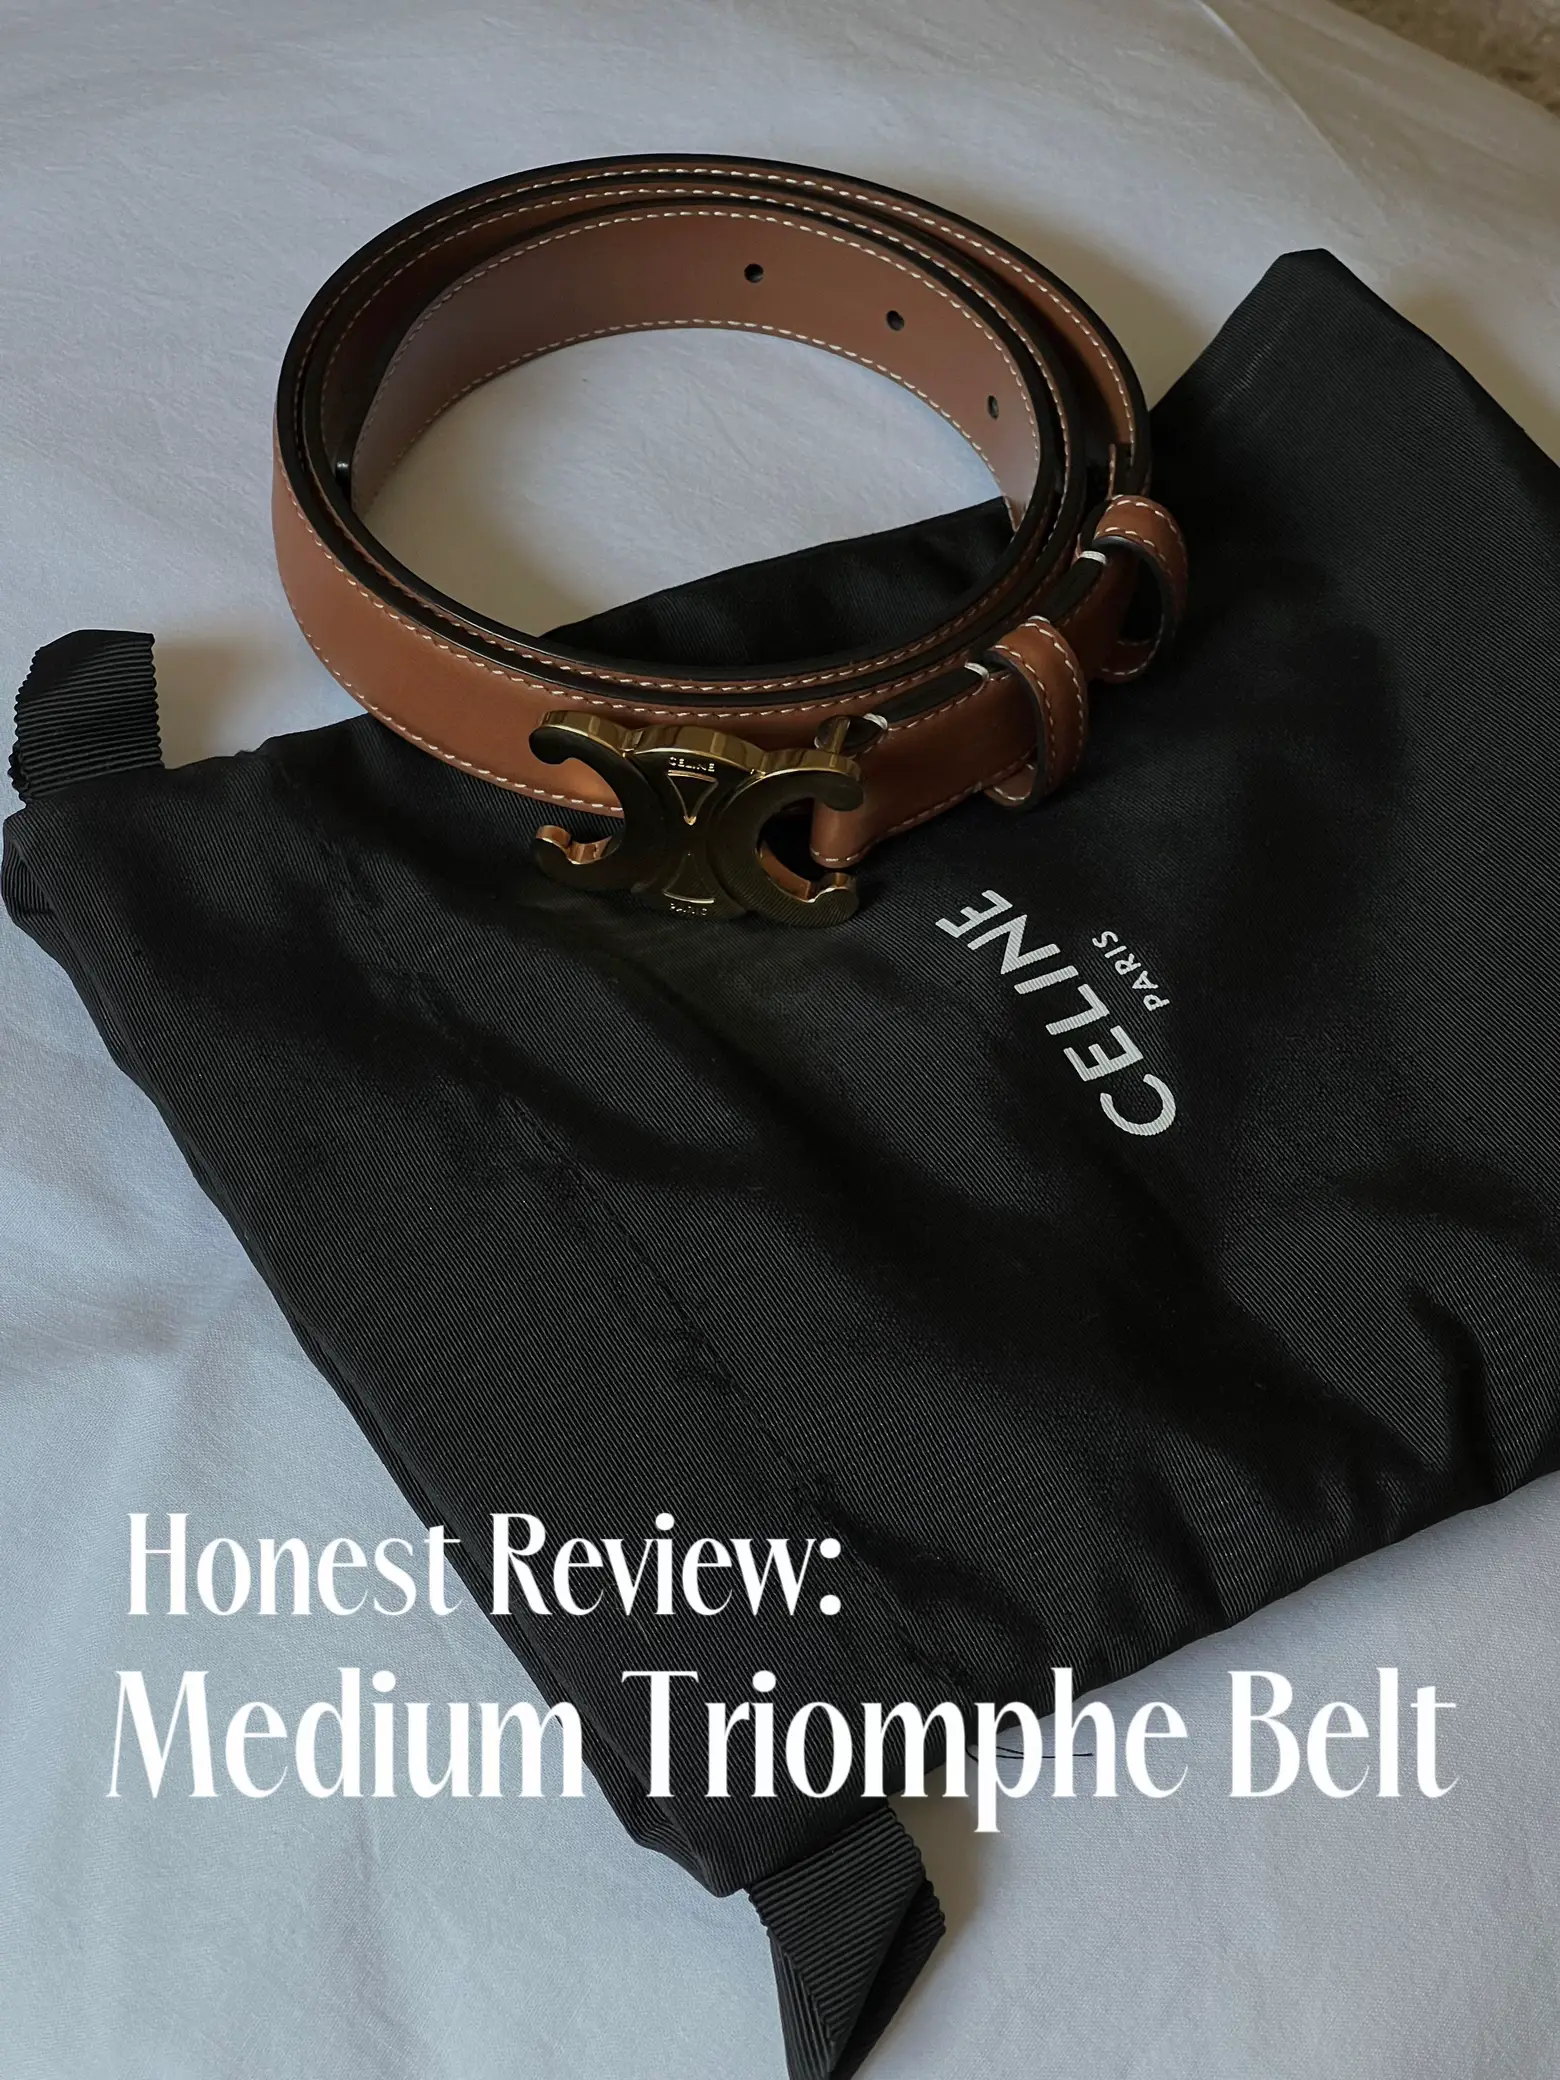 Celine Triomphe Belt, Product Review